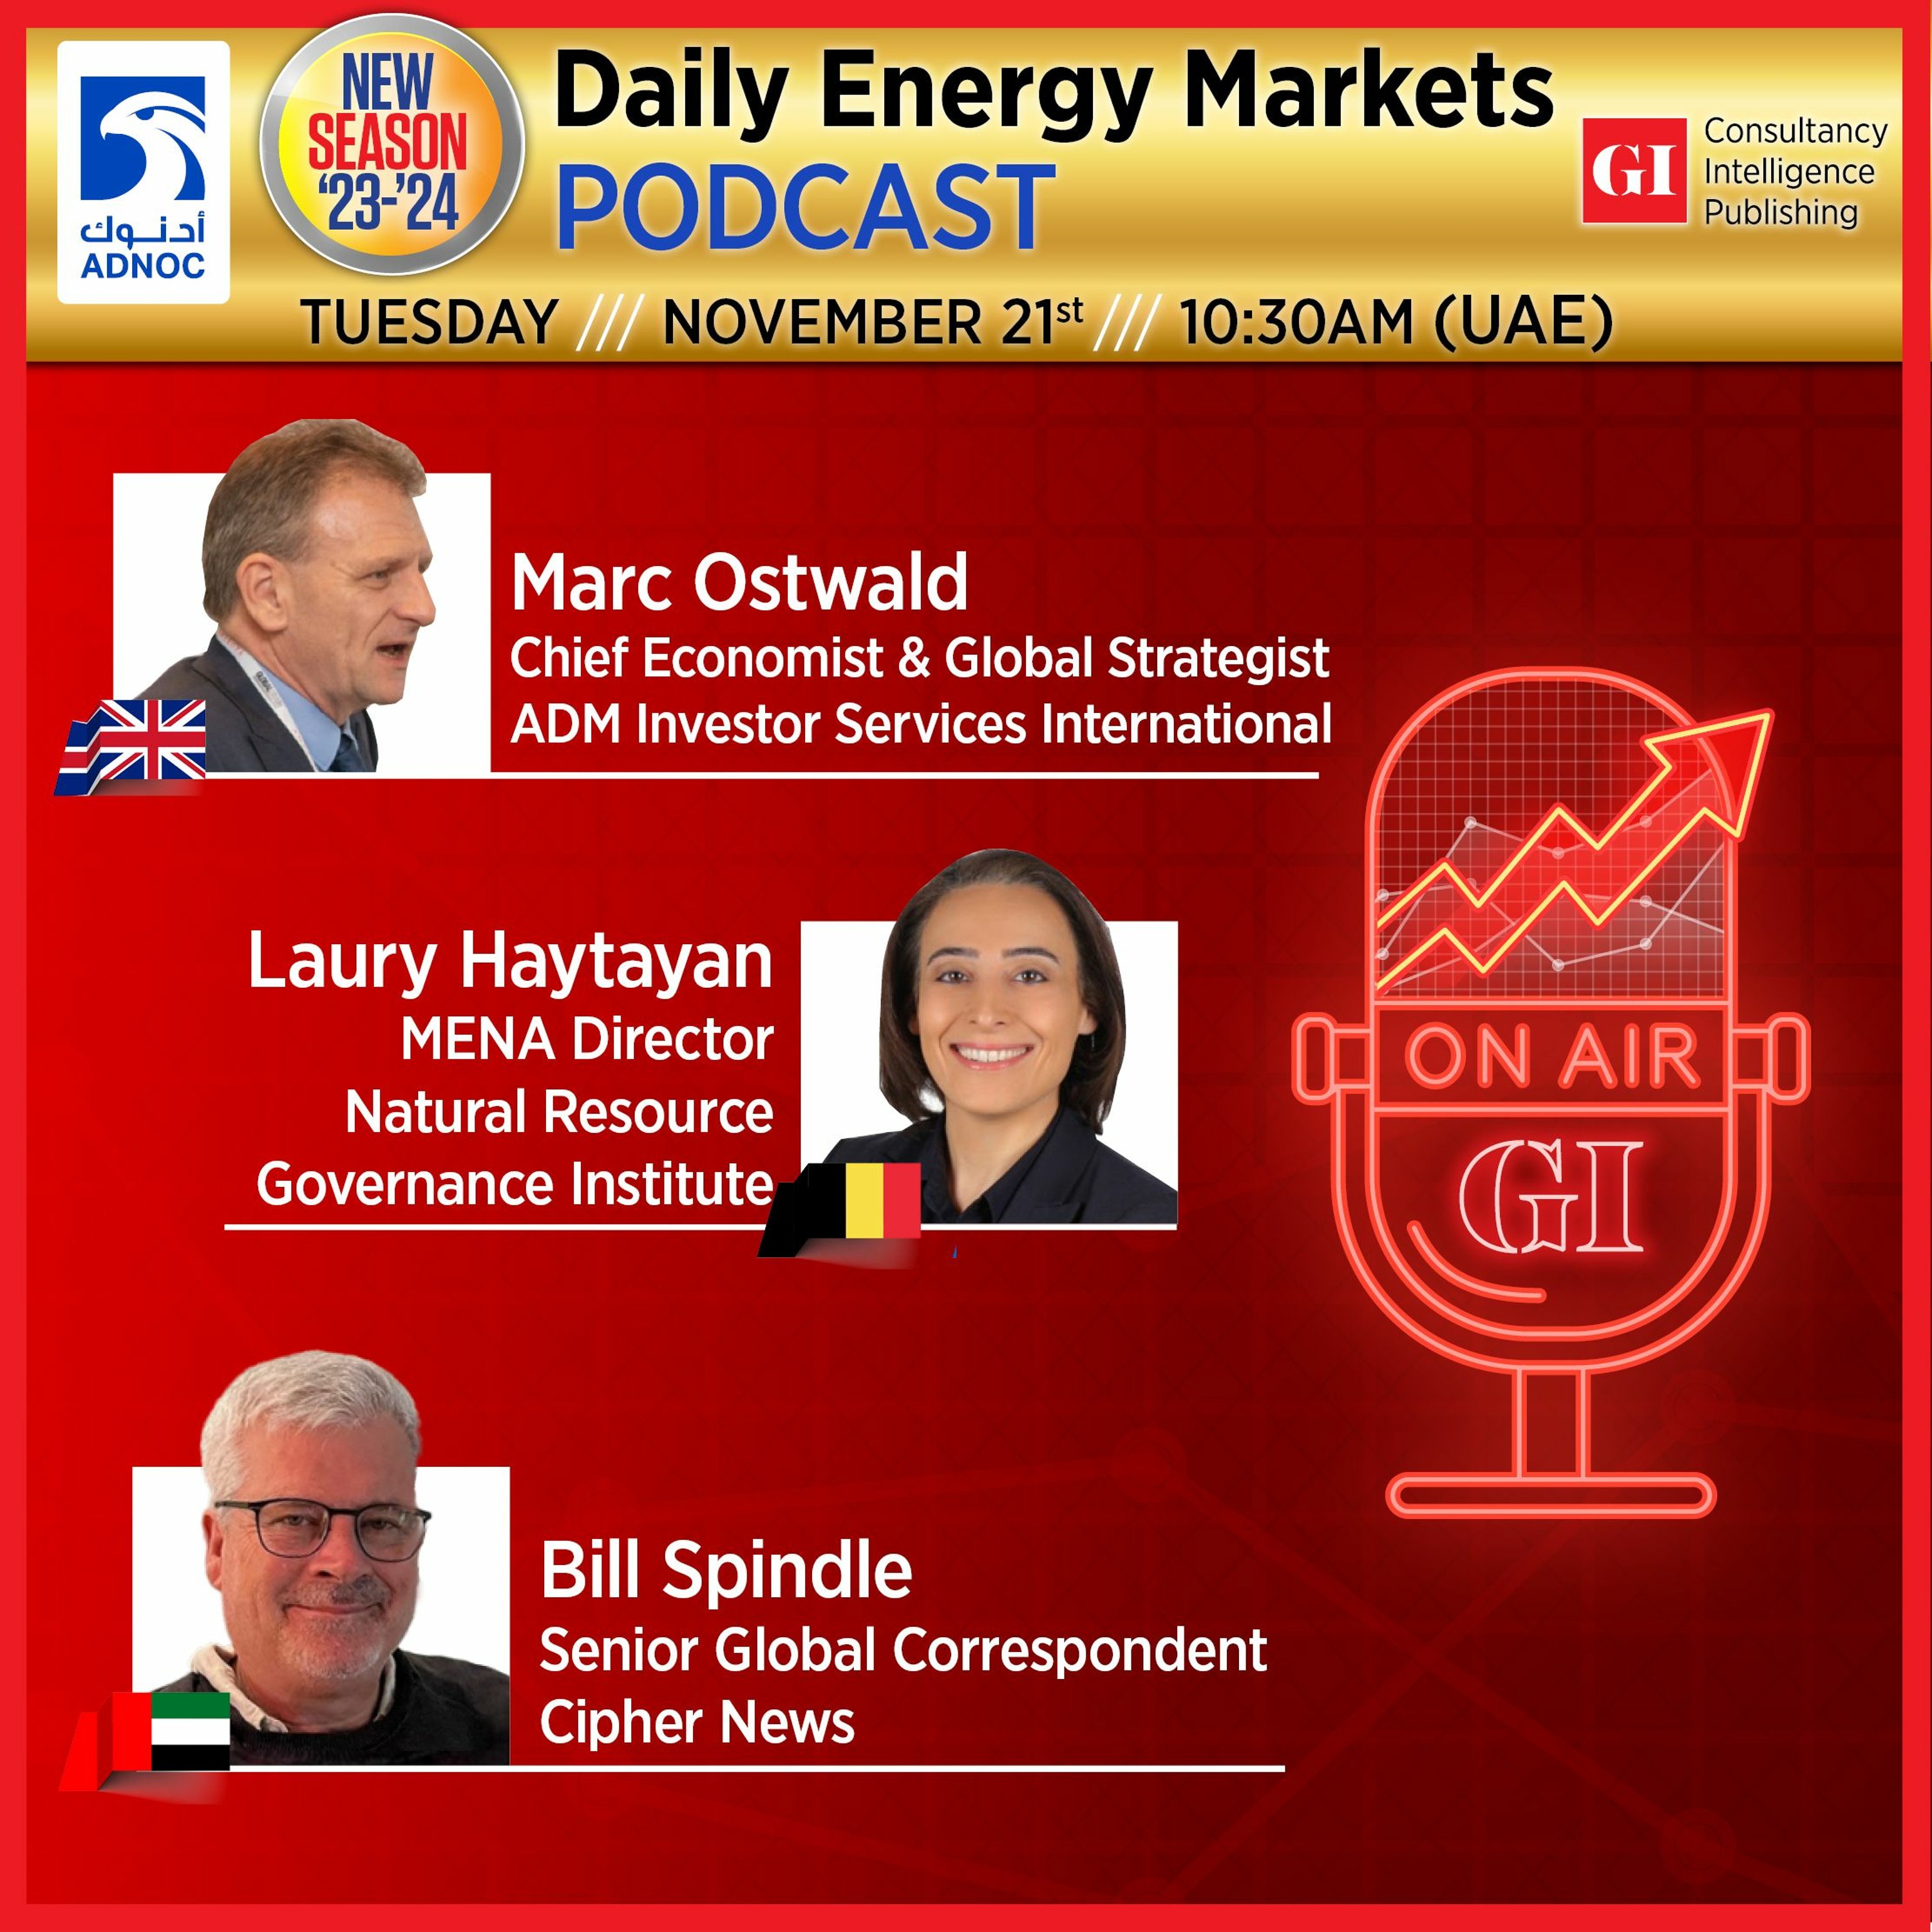 PODCAST: Daily Energy Markets - November 21st